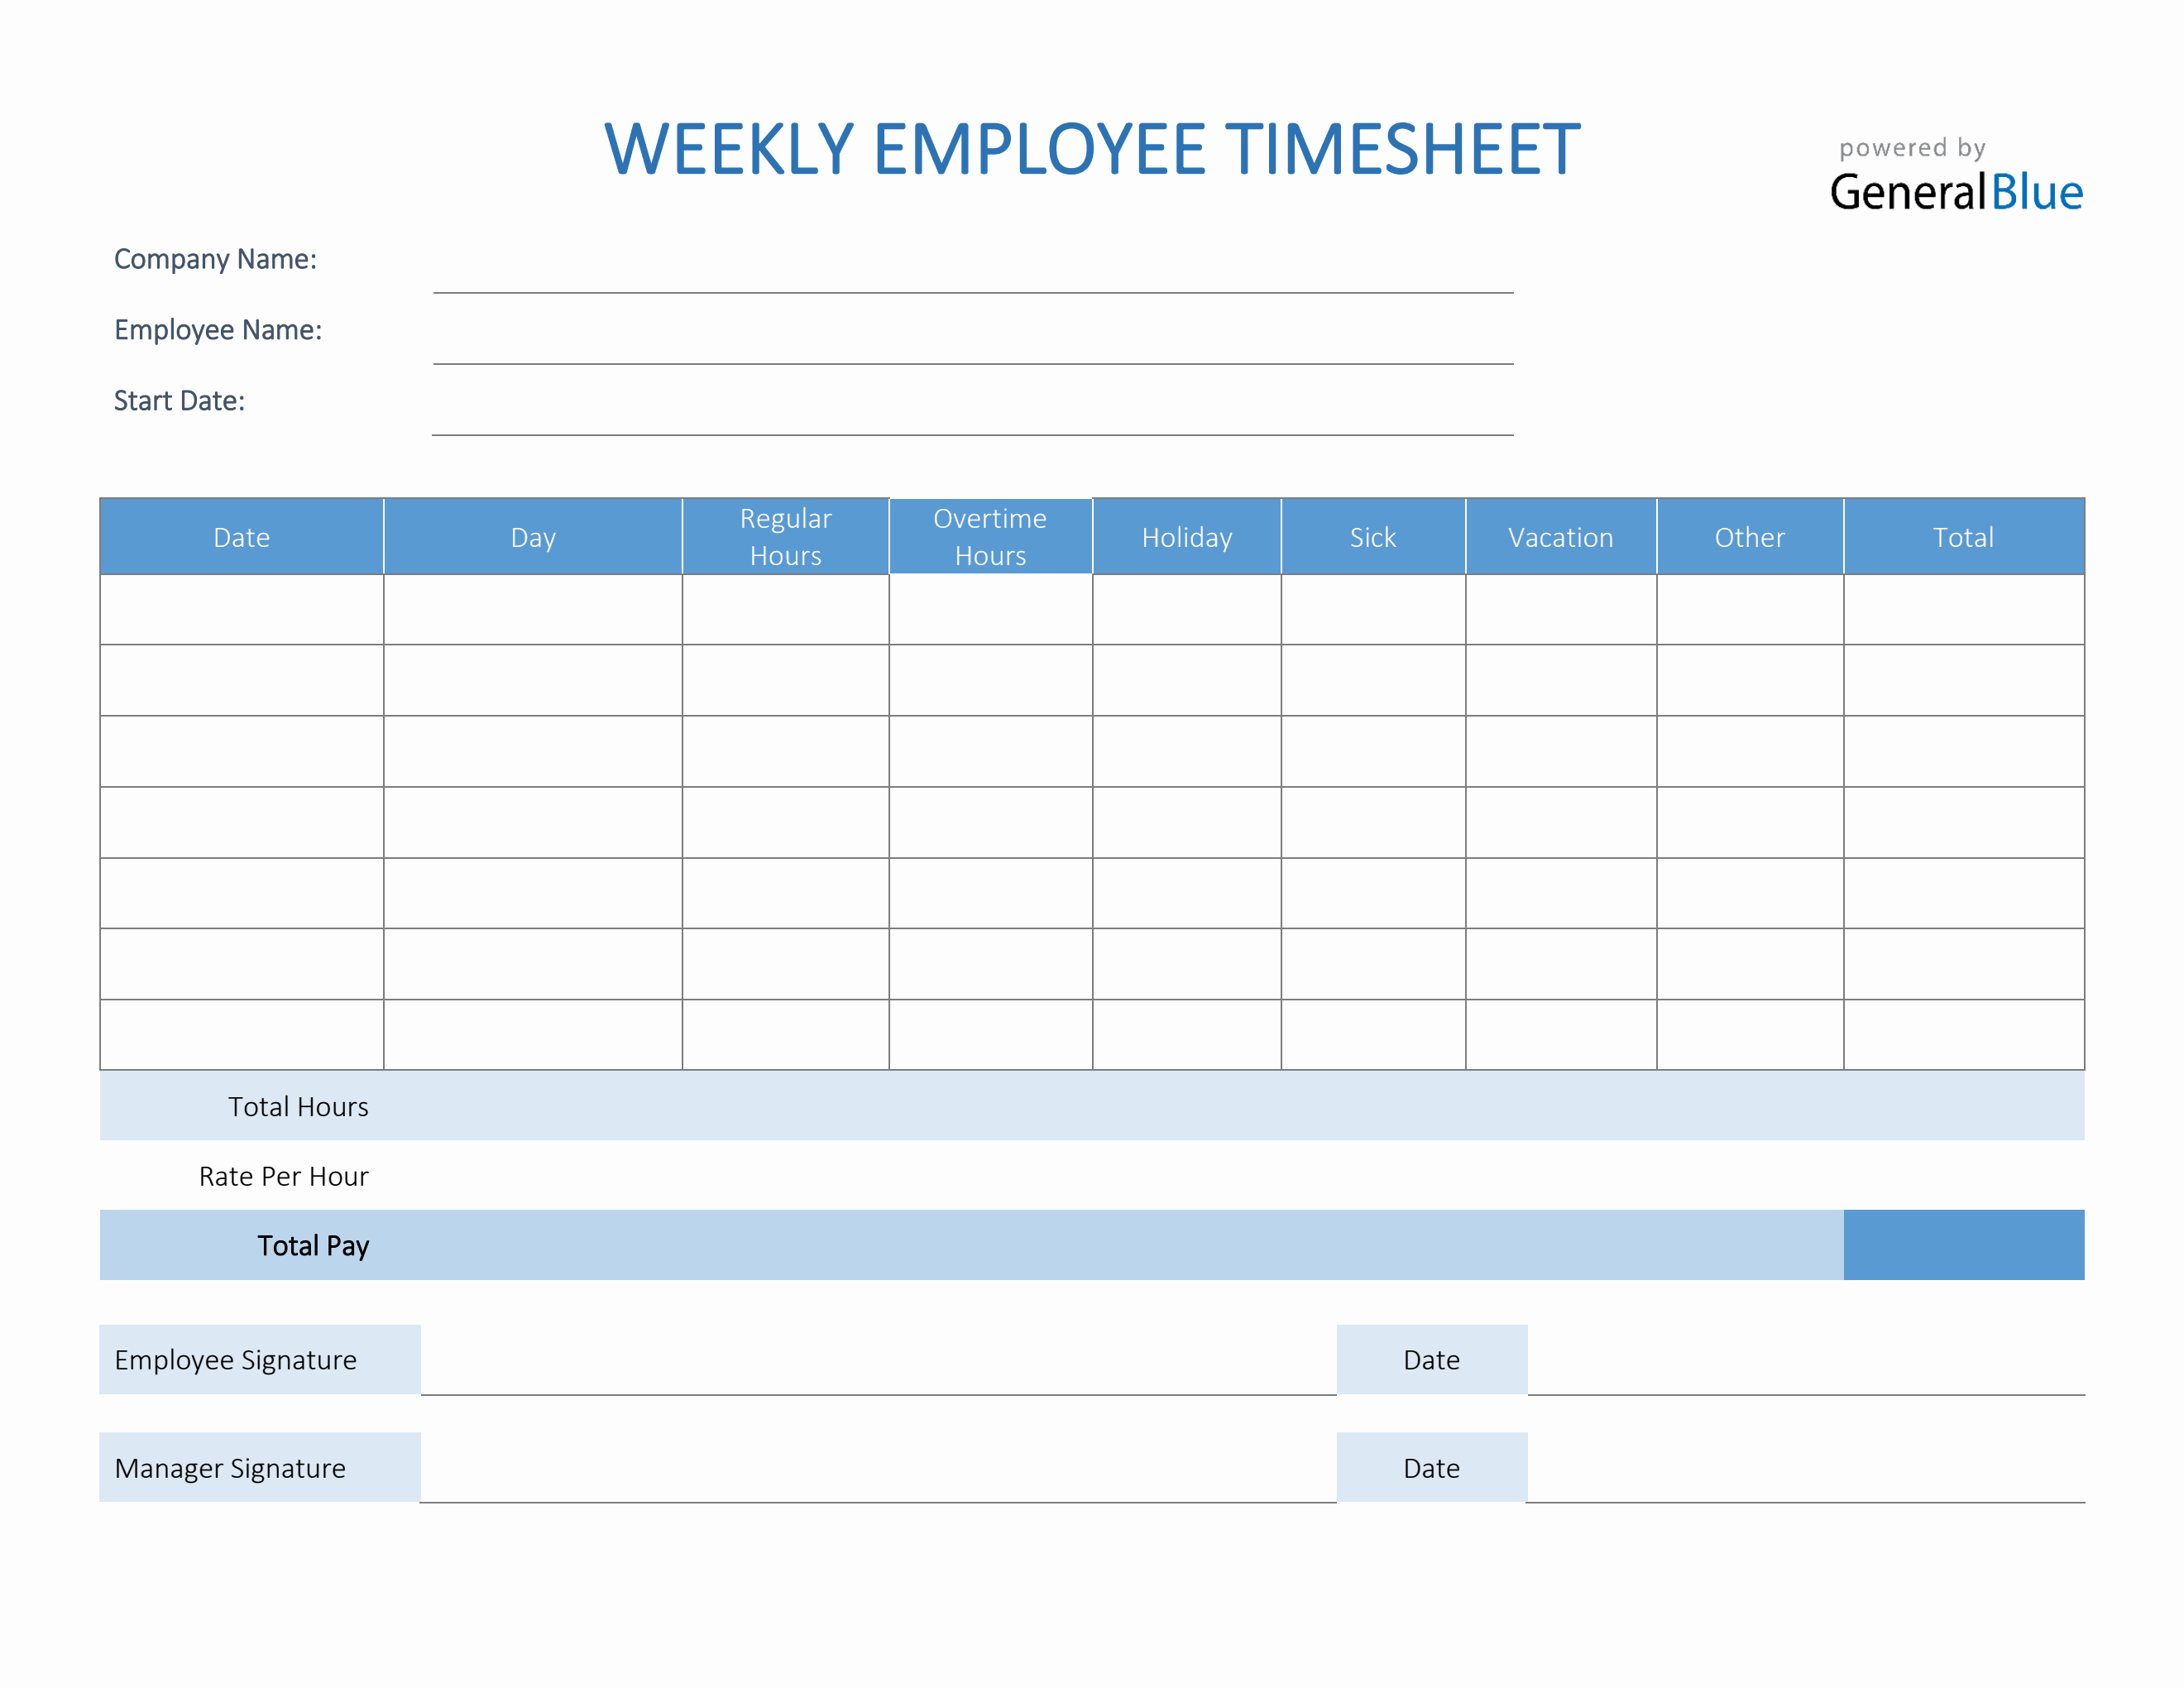 weekly-employee-timesheet-in-pdf